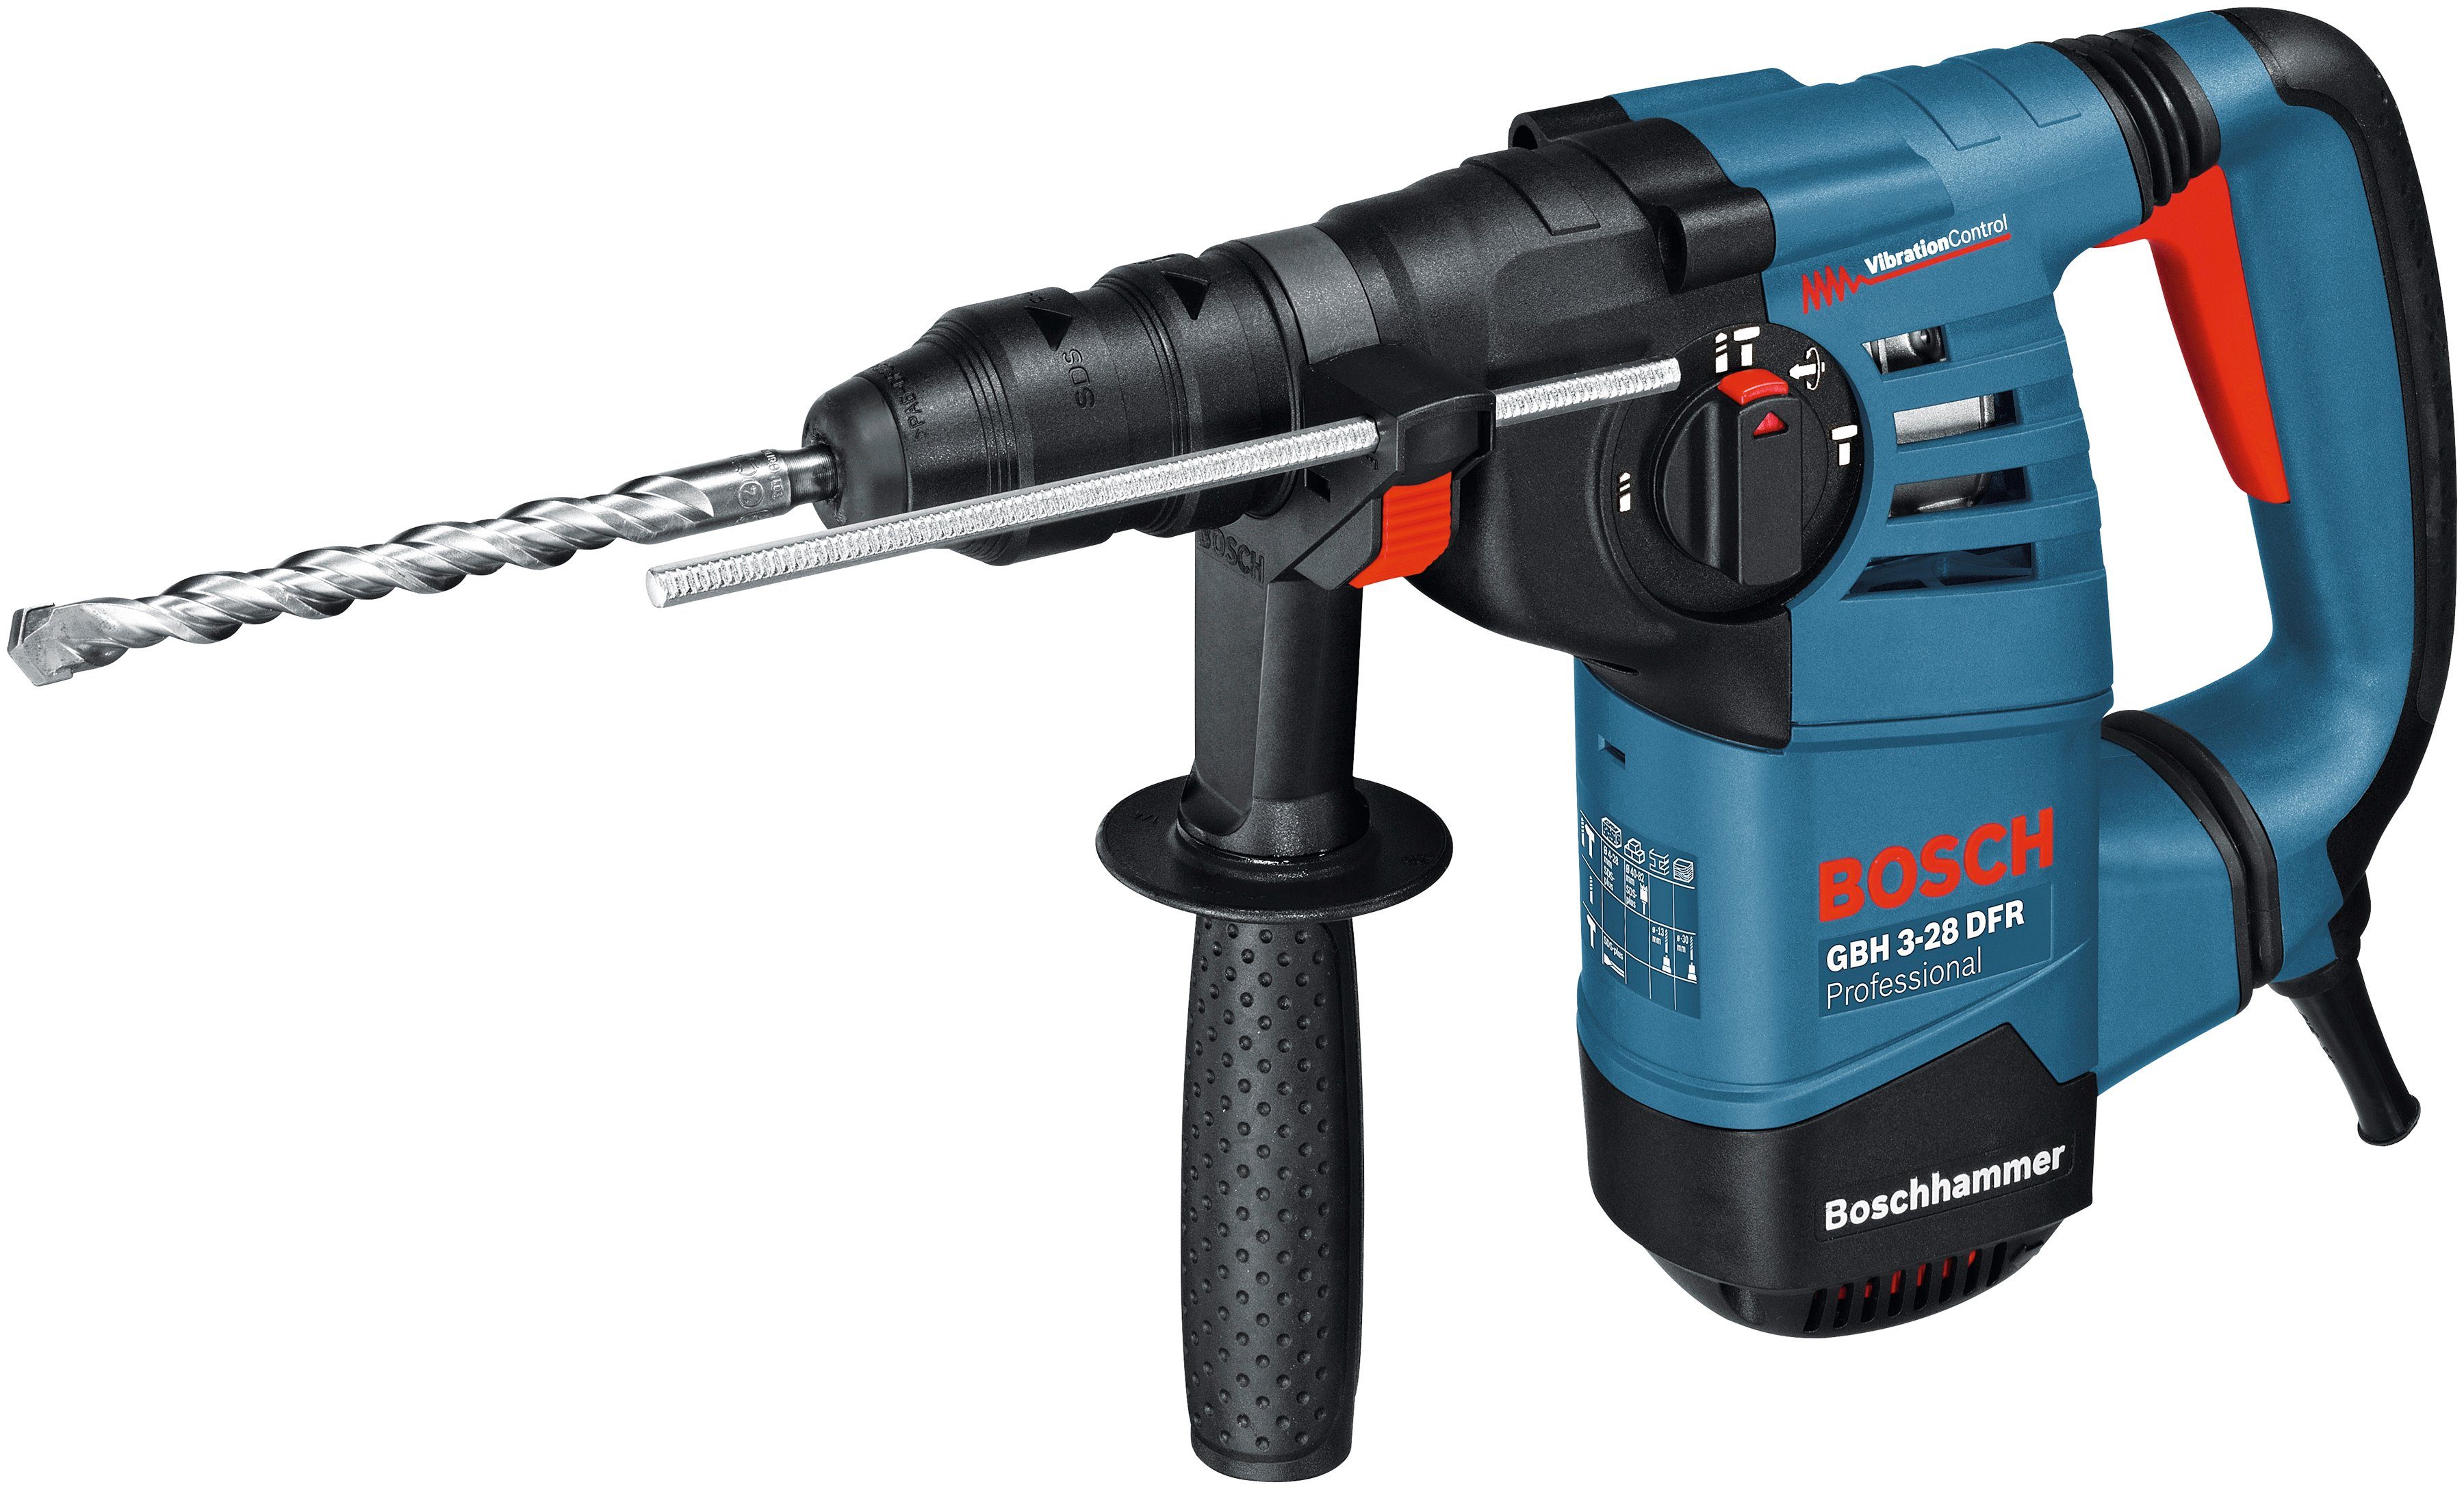 Professional GBH 900 U/min, max. im 3-28 Bosch DFR, Koffer Bohrhammer SDS-Plus,